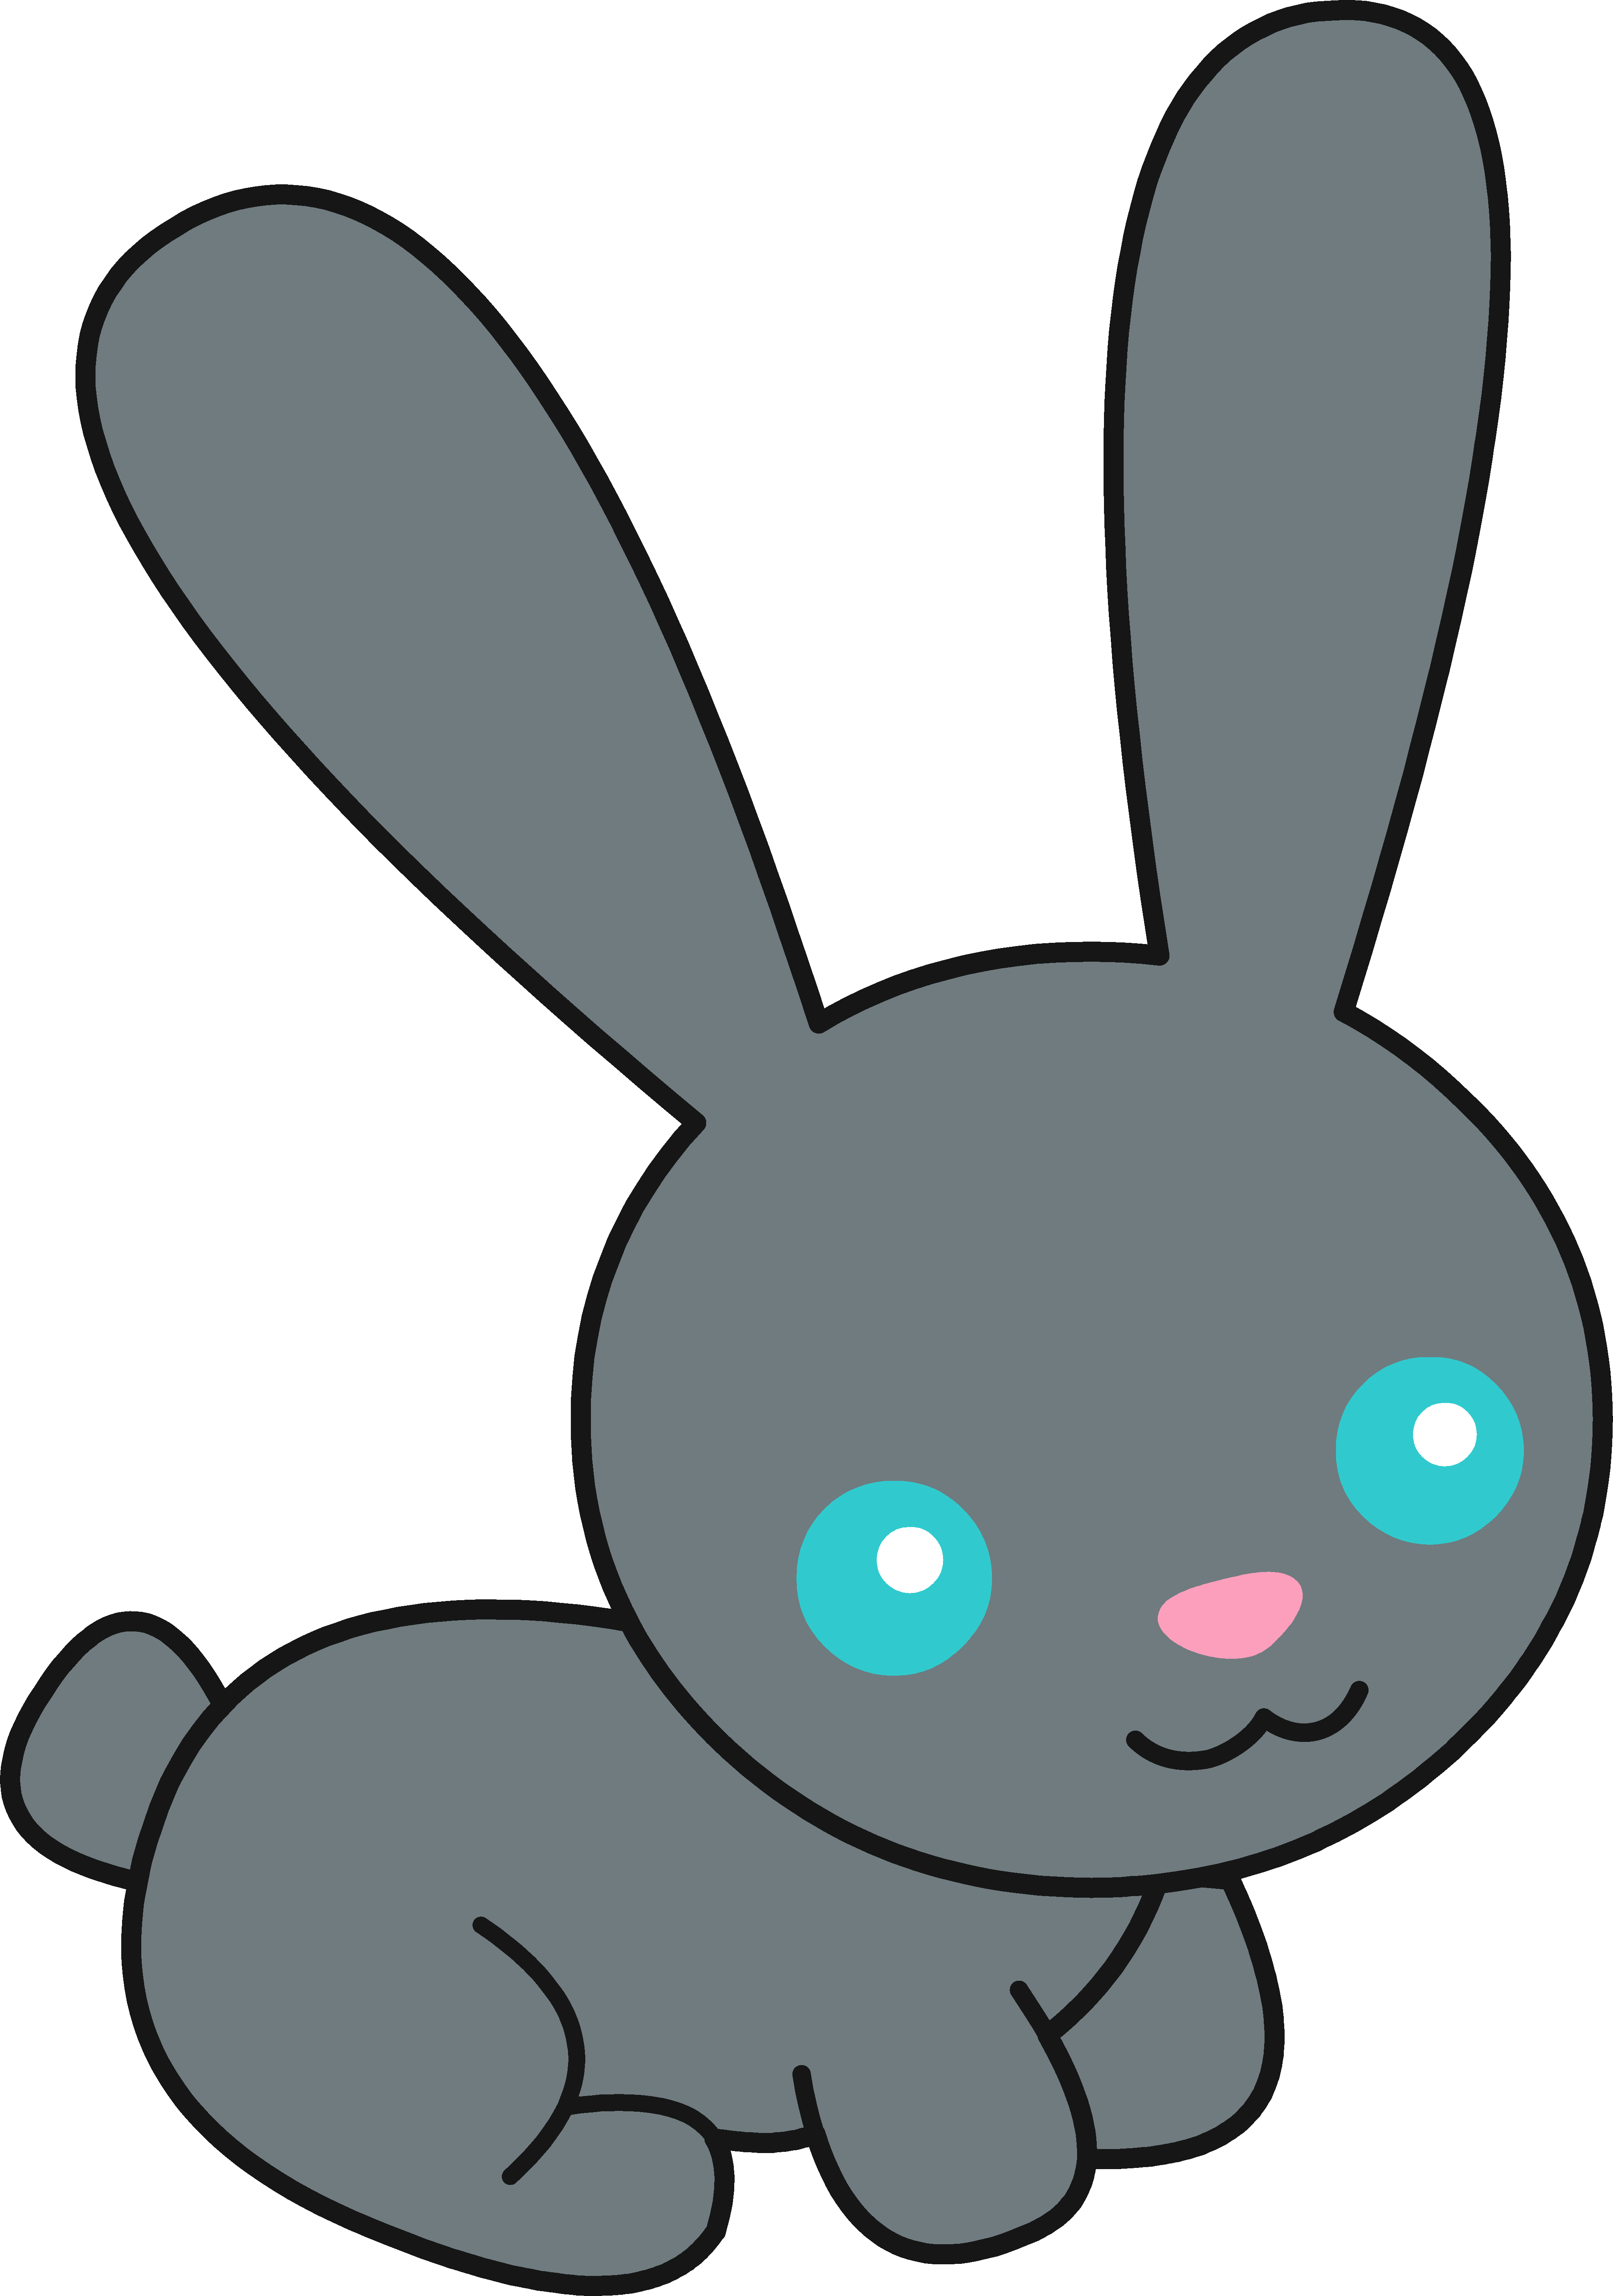 Cute Bunny Clipart - Cliparts.co